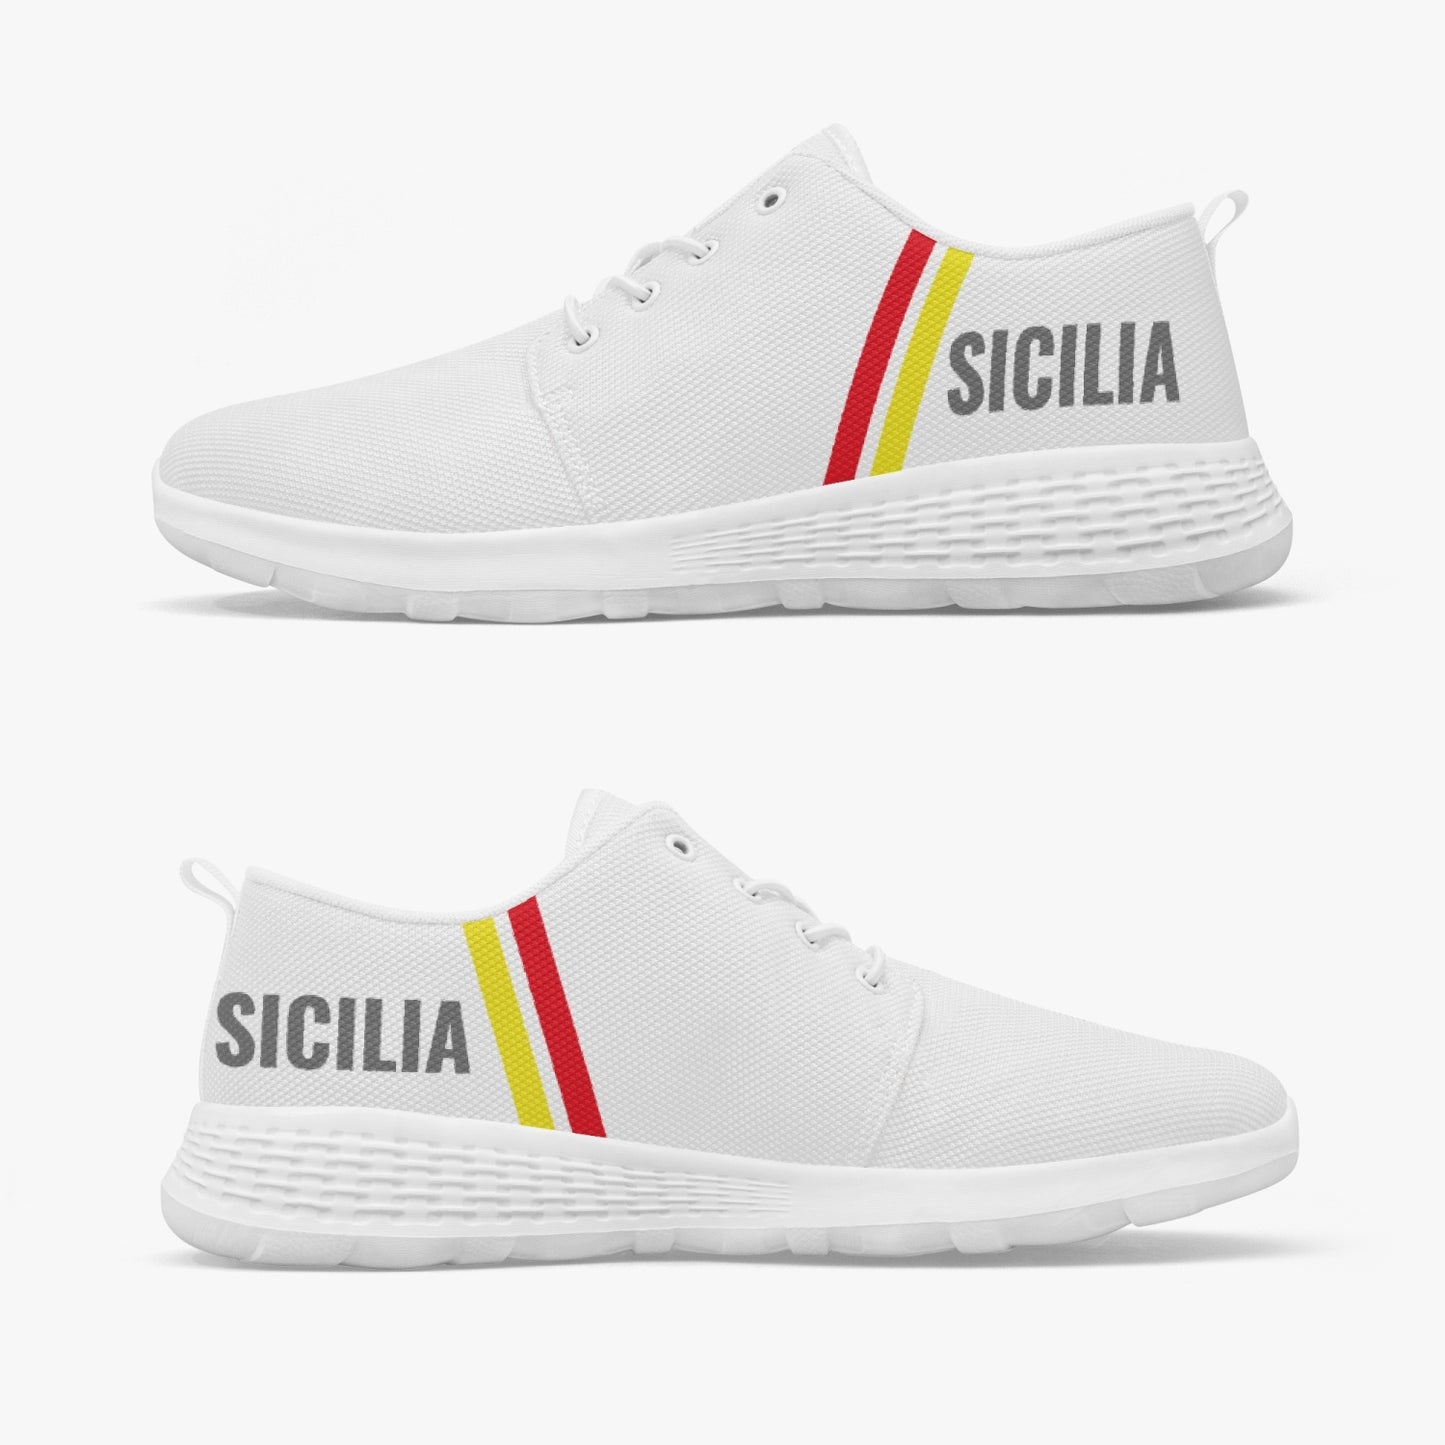 Sicily Running Shoes - Sicilia - men's /women's sizes